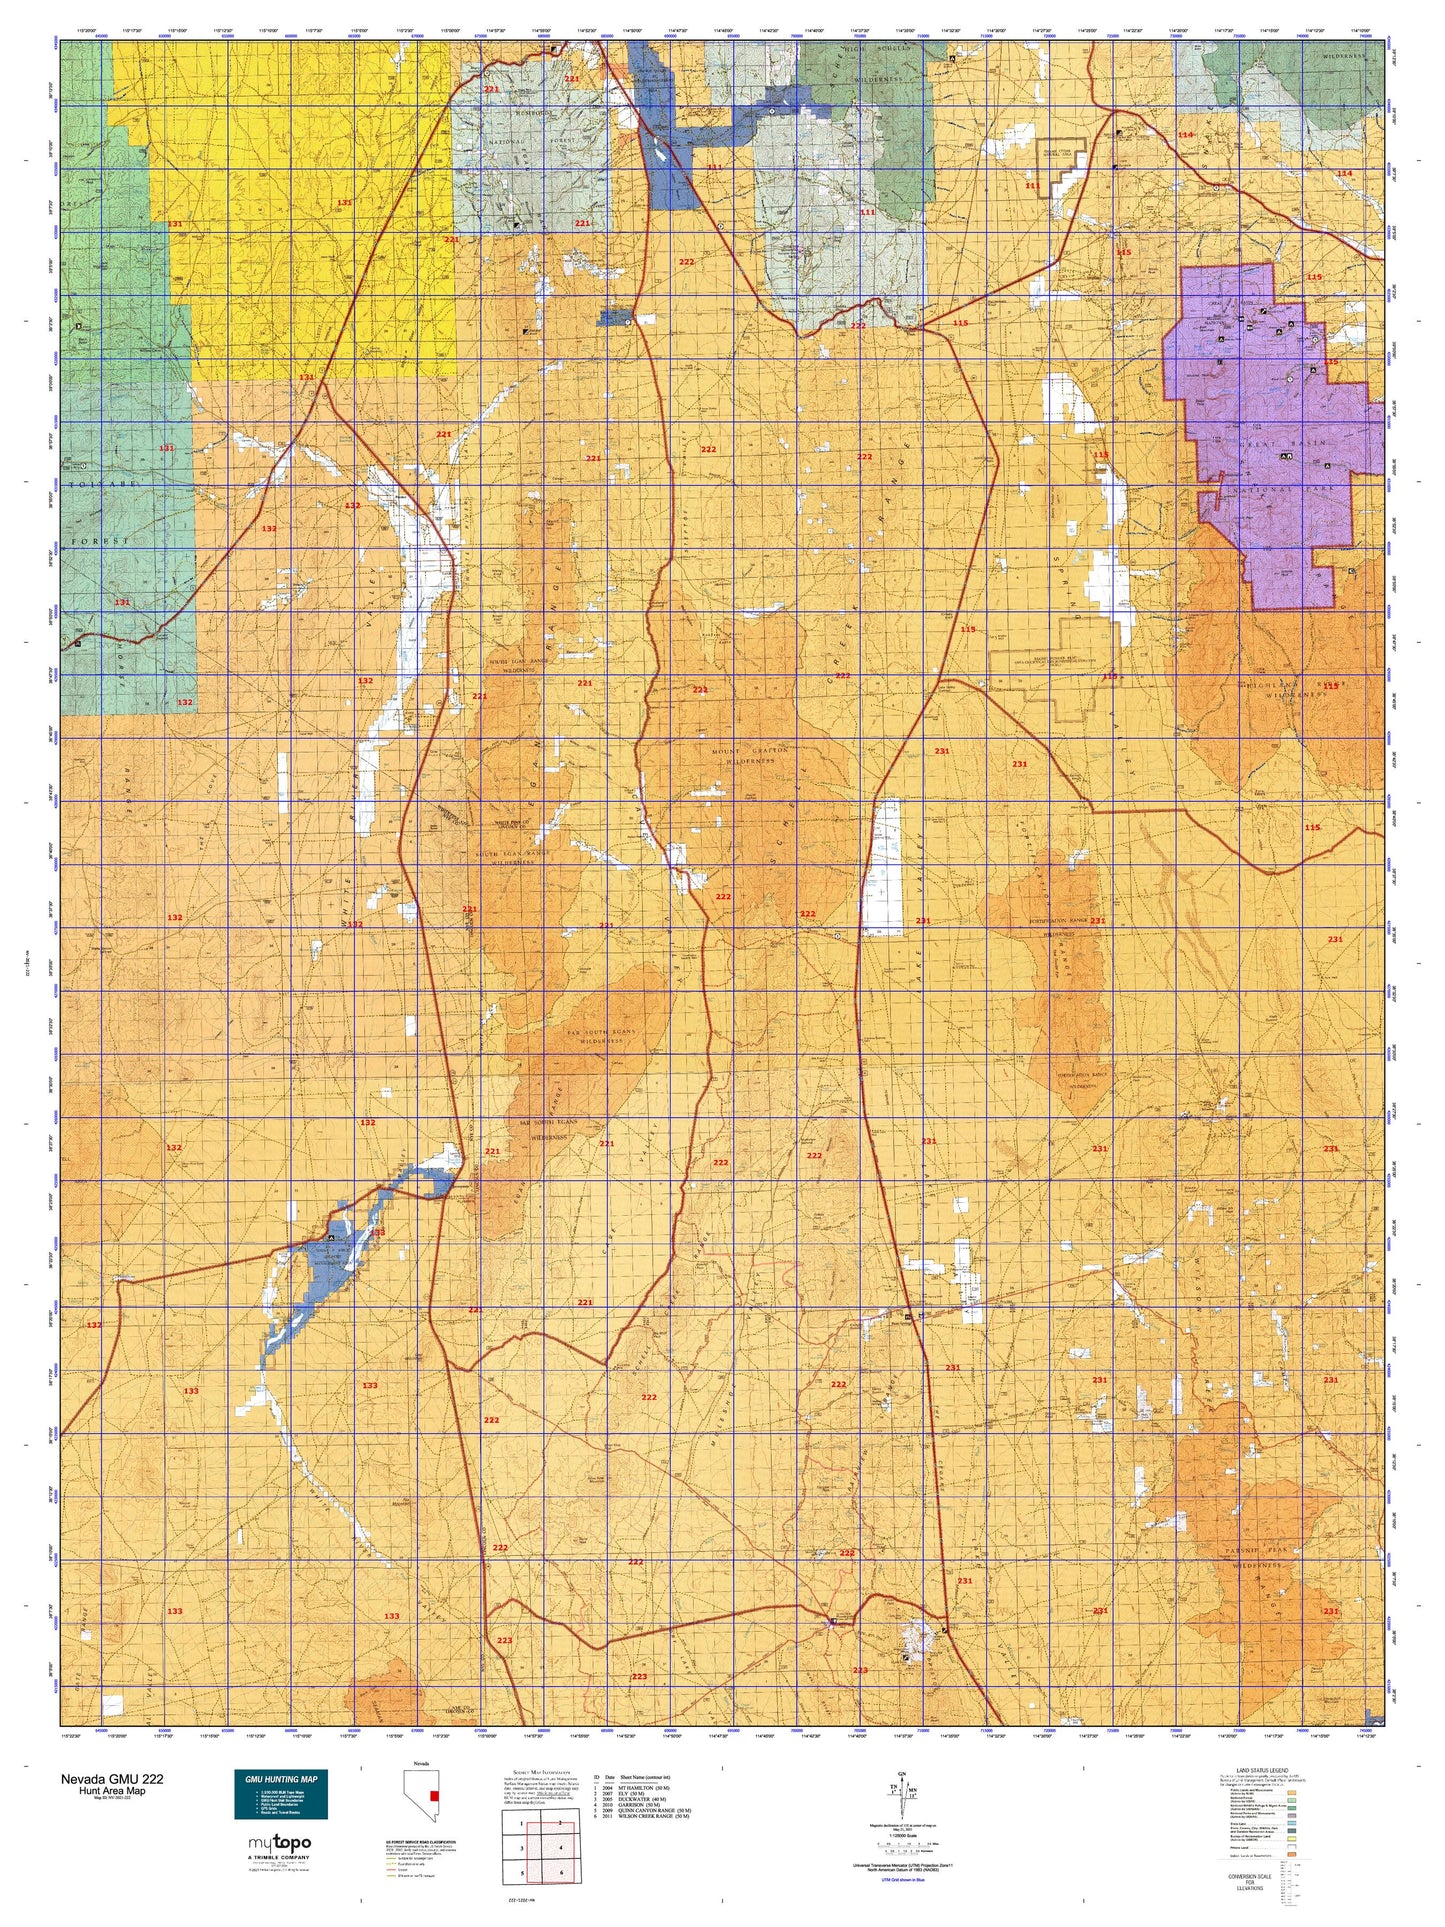 Nevada GMU 222 Map Image